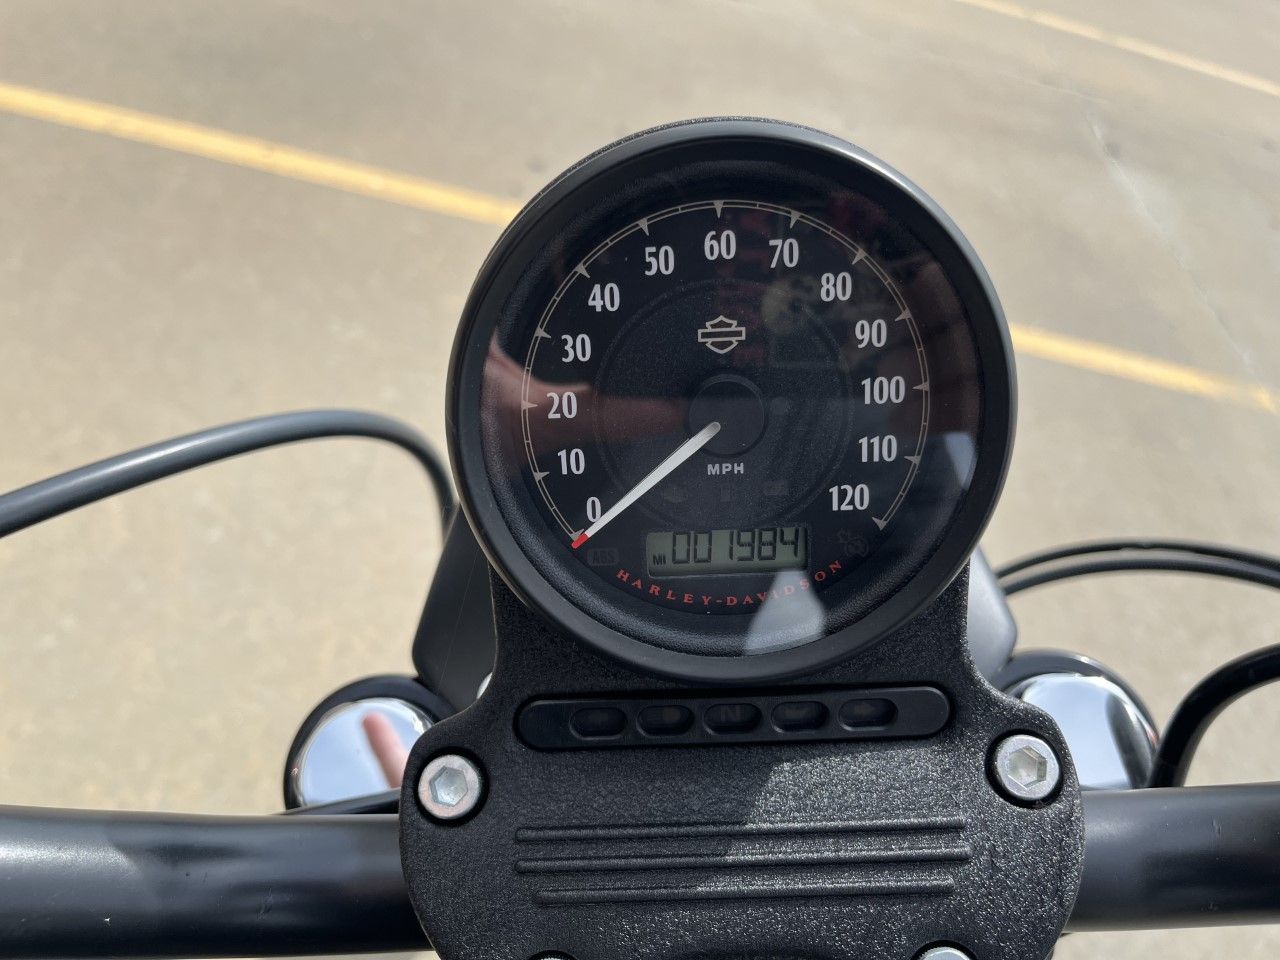 2022 Harley-Davidson Iron 883™ in Norman, Oklahoma - Photo 9